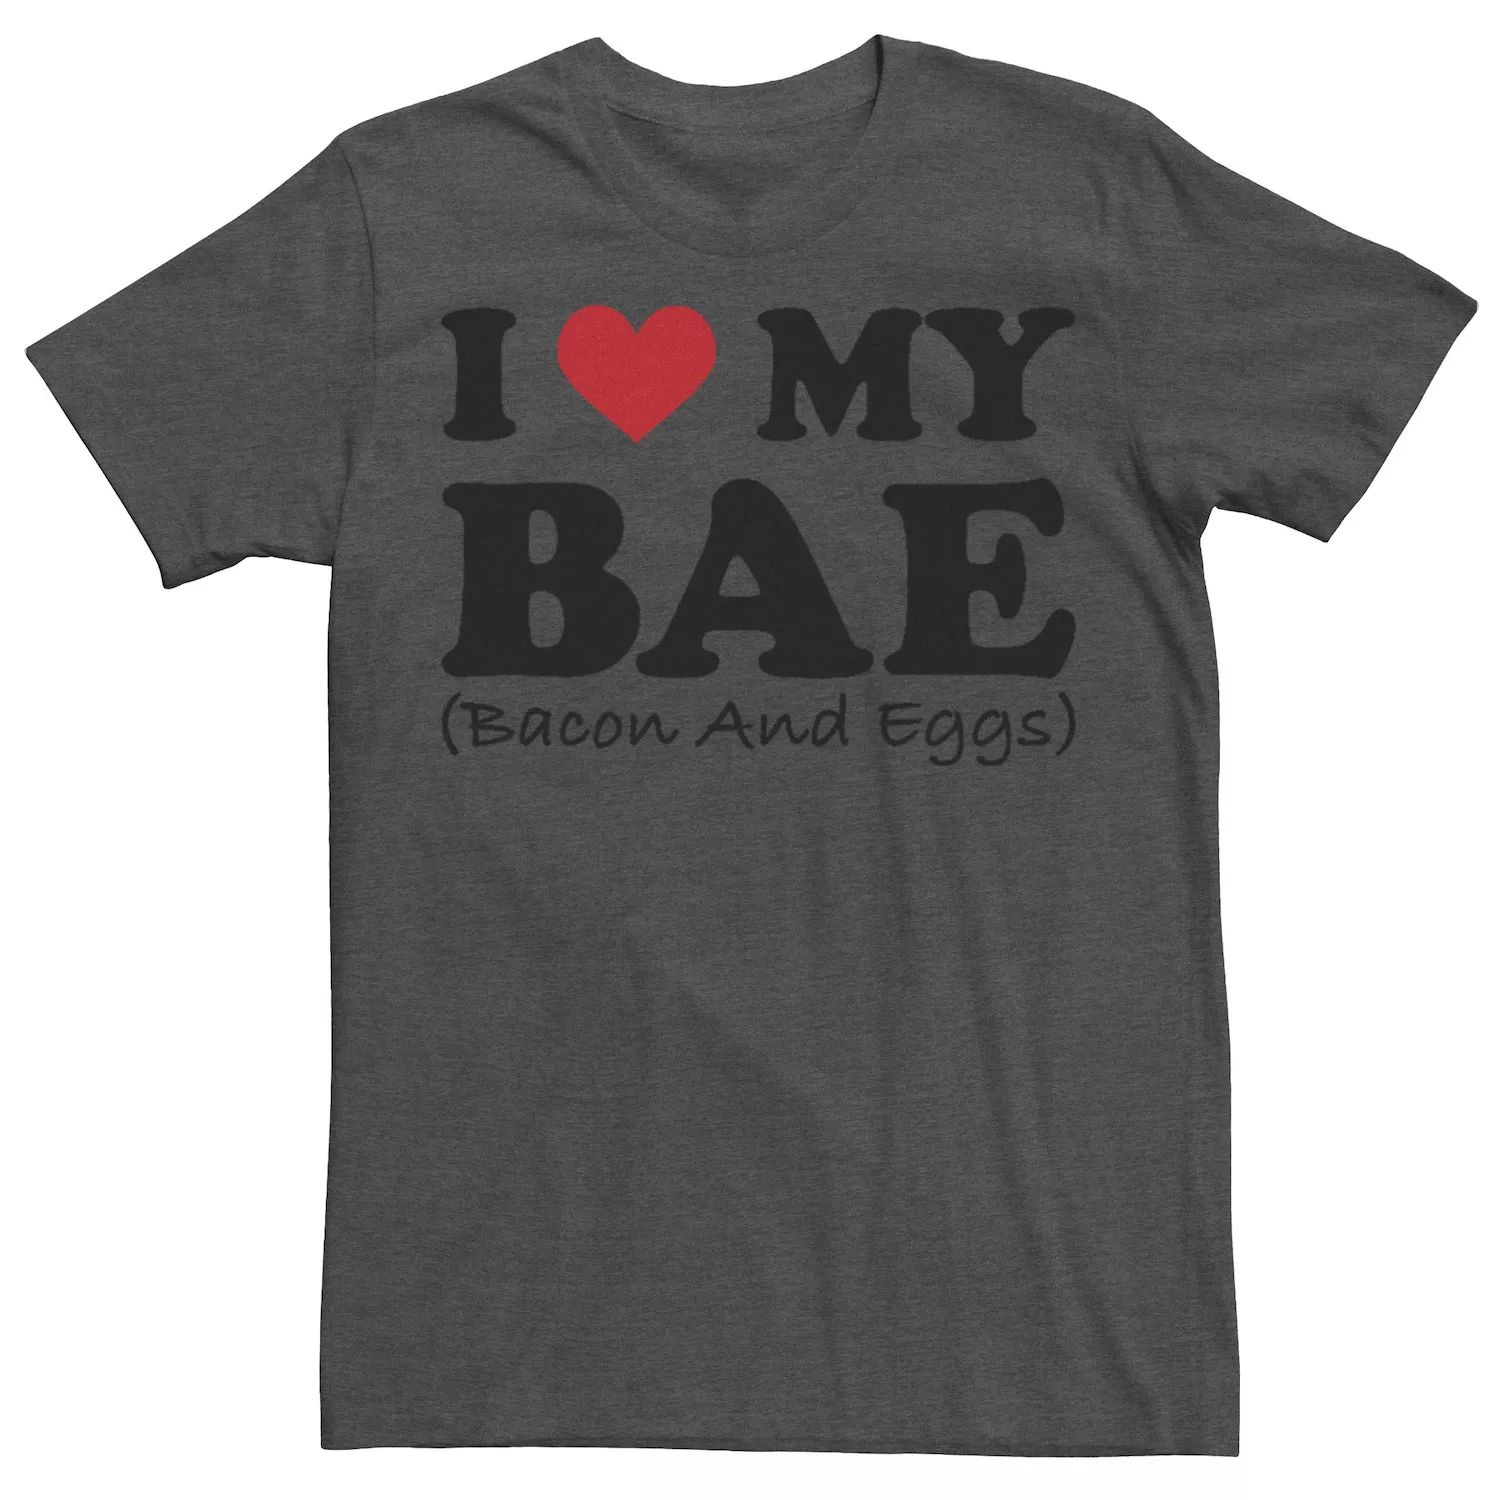 Мужская футболка с надписью I Love My Bae, беконом и яйцами Licensed Character